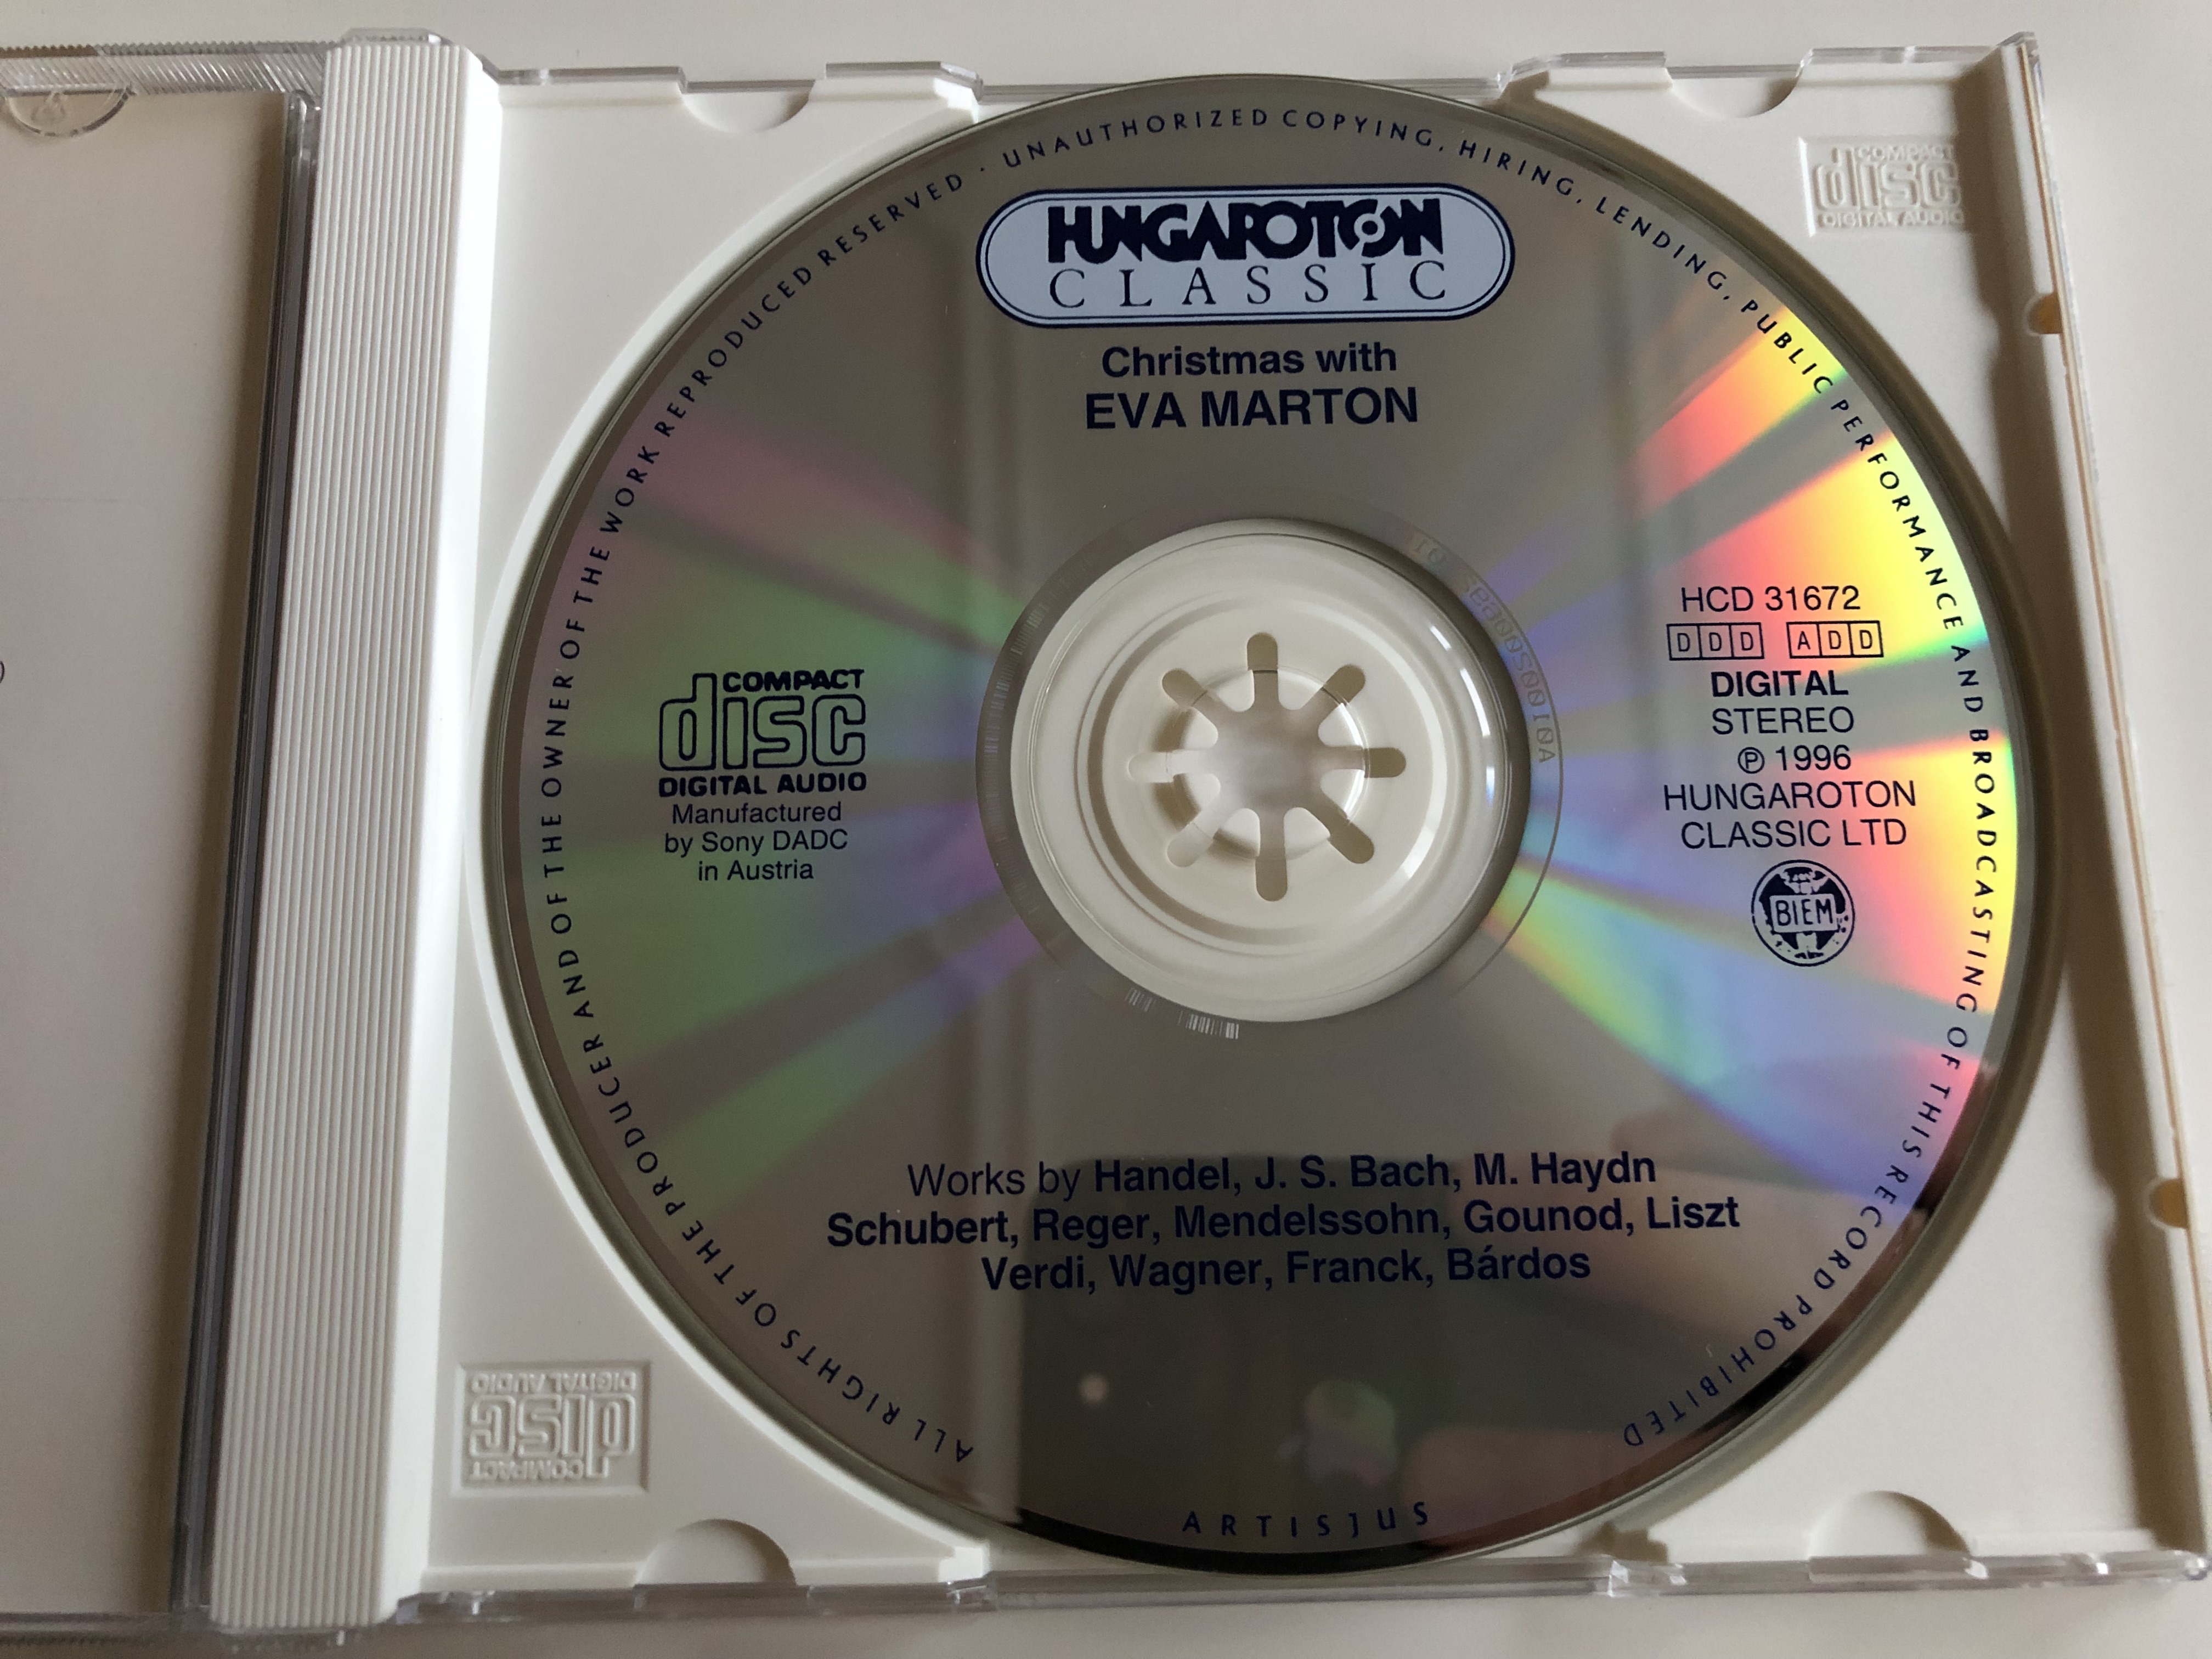 christmas-with-eva-marton-handel-schubert-mendelssohn-gounod-verdi-wagner-franck-b-rdos-audio-cd-1996-hungaroton-classic-hcd-31672-5-.jpg